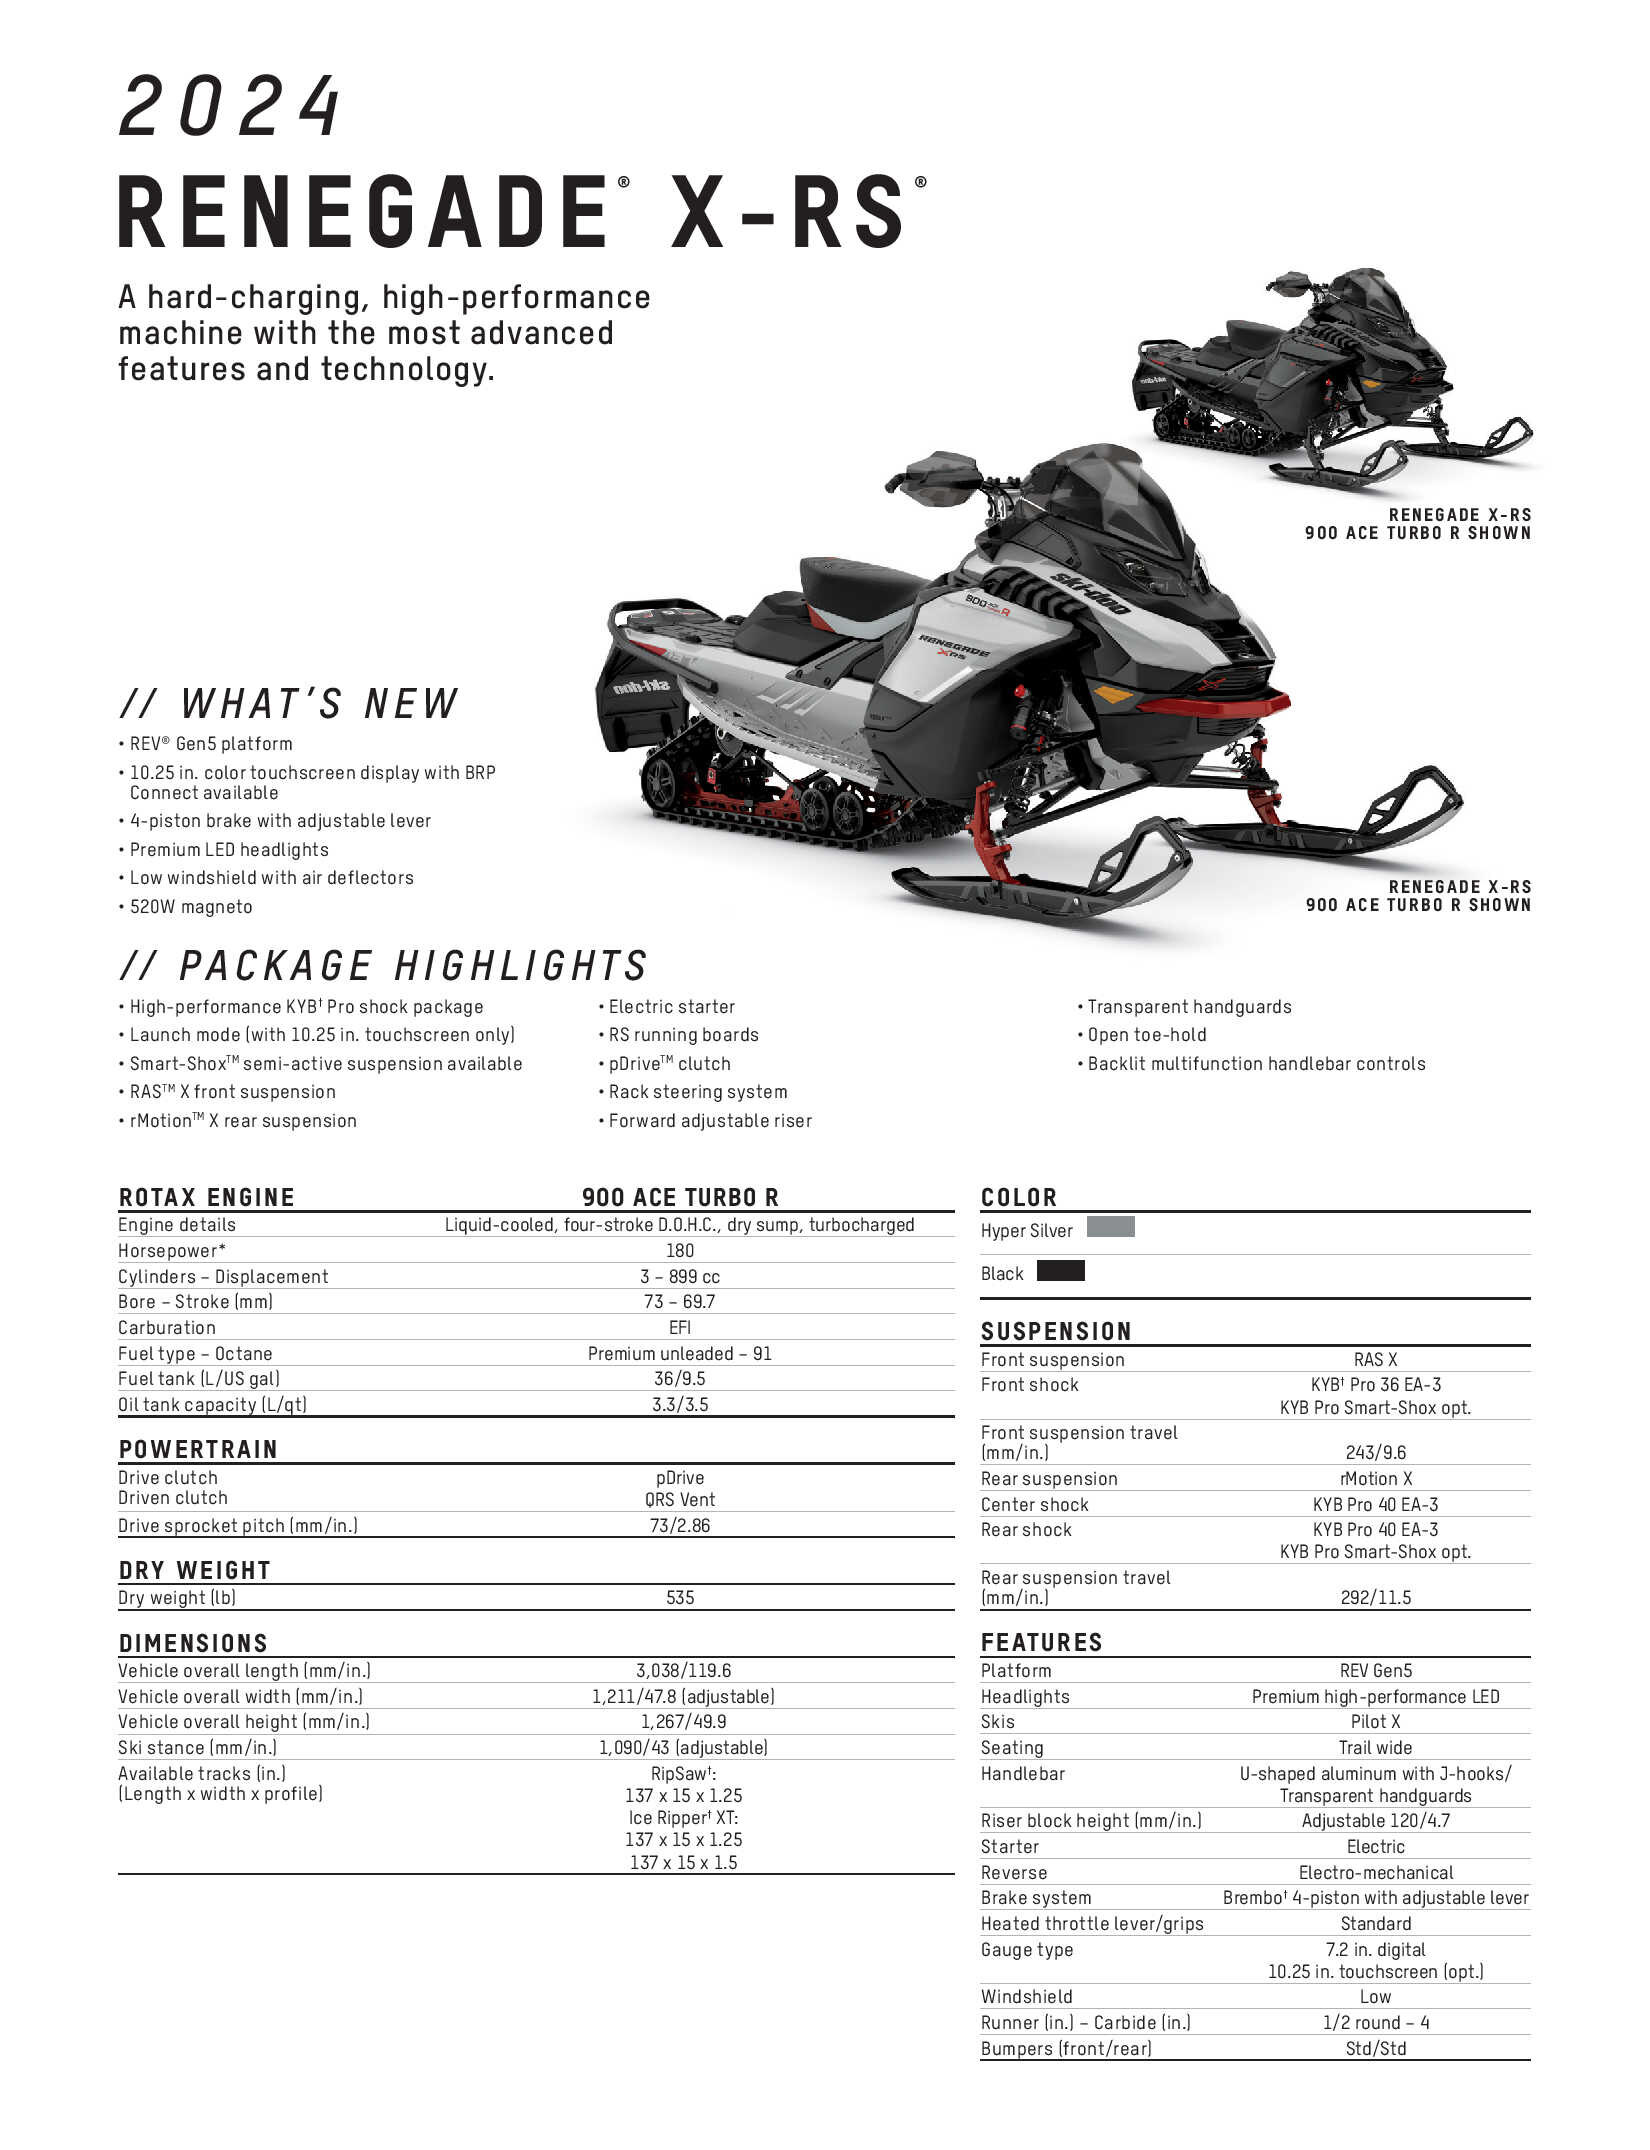 2024 Ski-Doo Renegade X-RS Specs